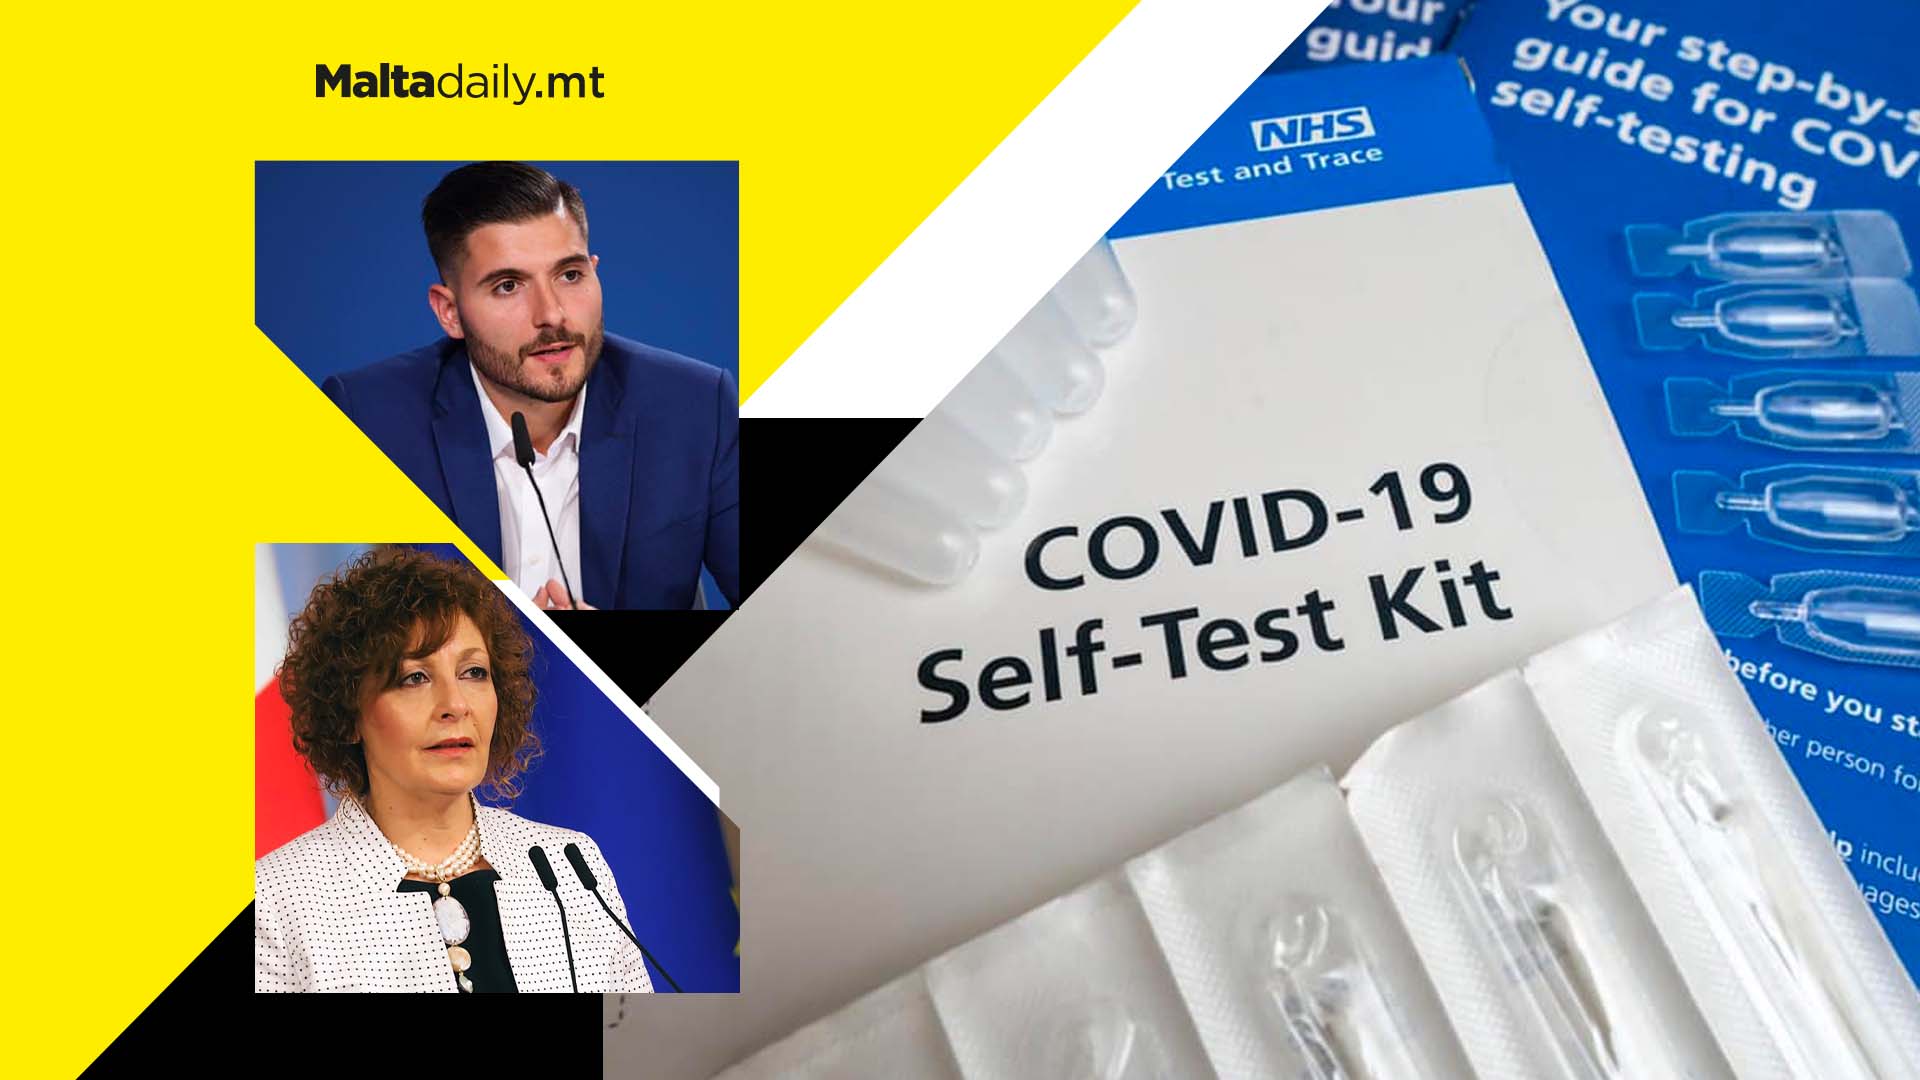 Free COVID self-testing kits could have massive benefits says PN MP